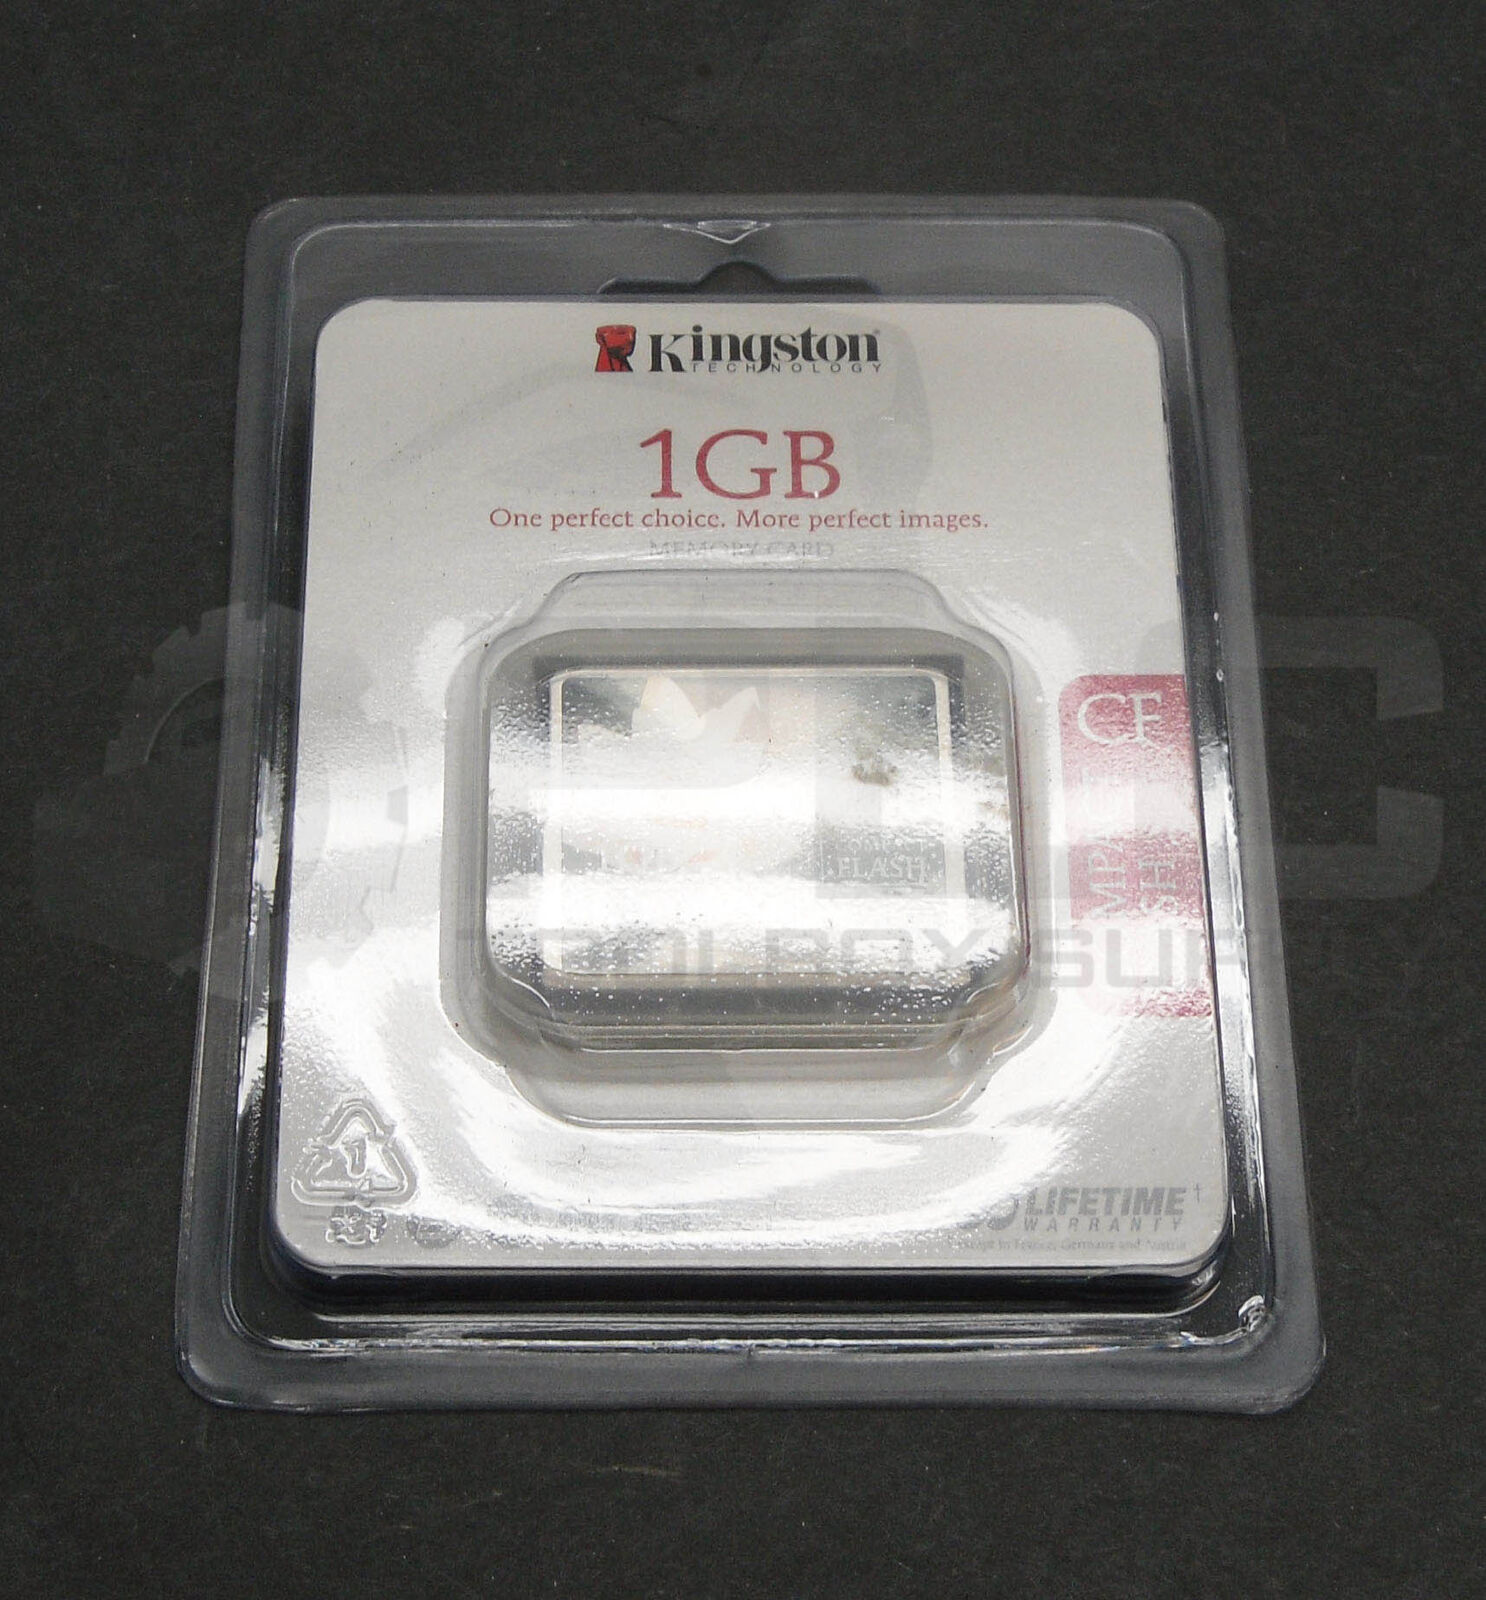 SEALED NEW KINGSTON CF/1GB 1GB COMPACT FLASH MEMORY CARD